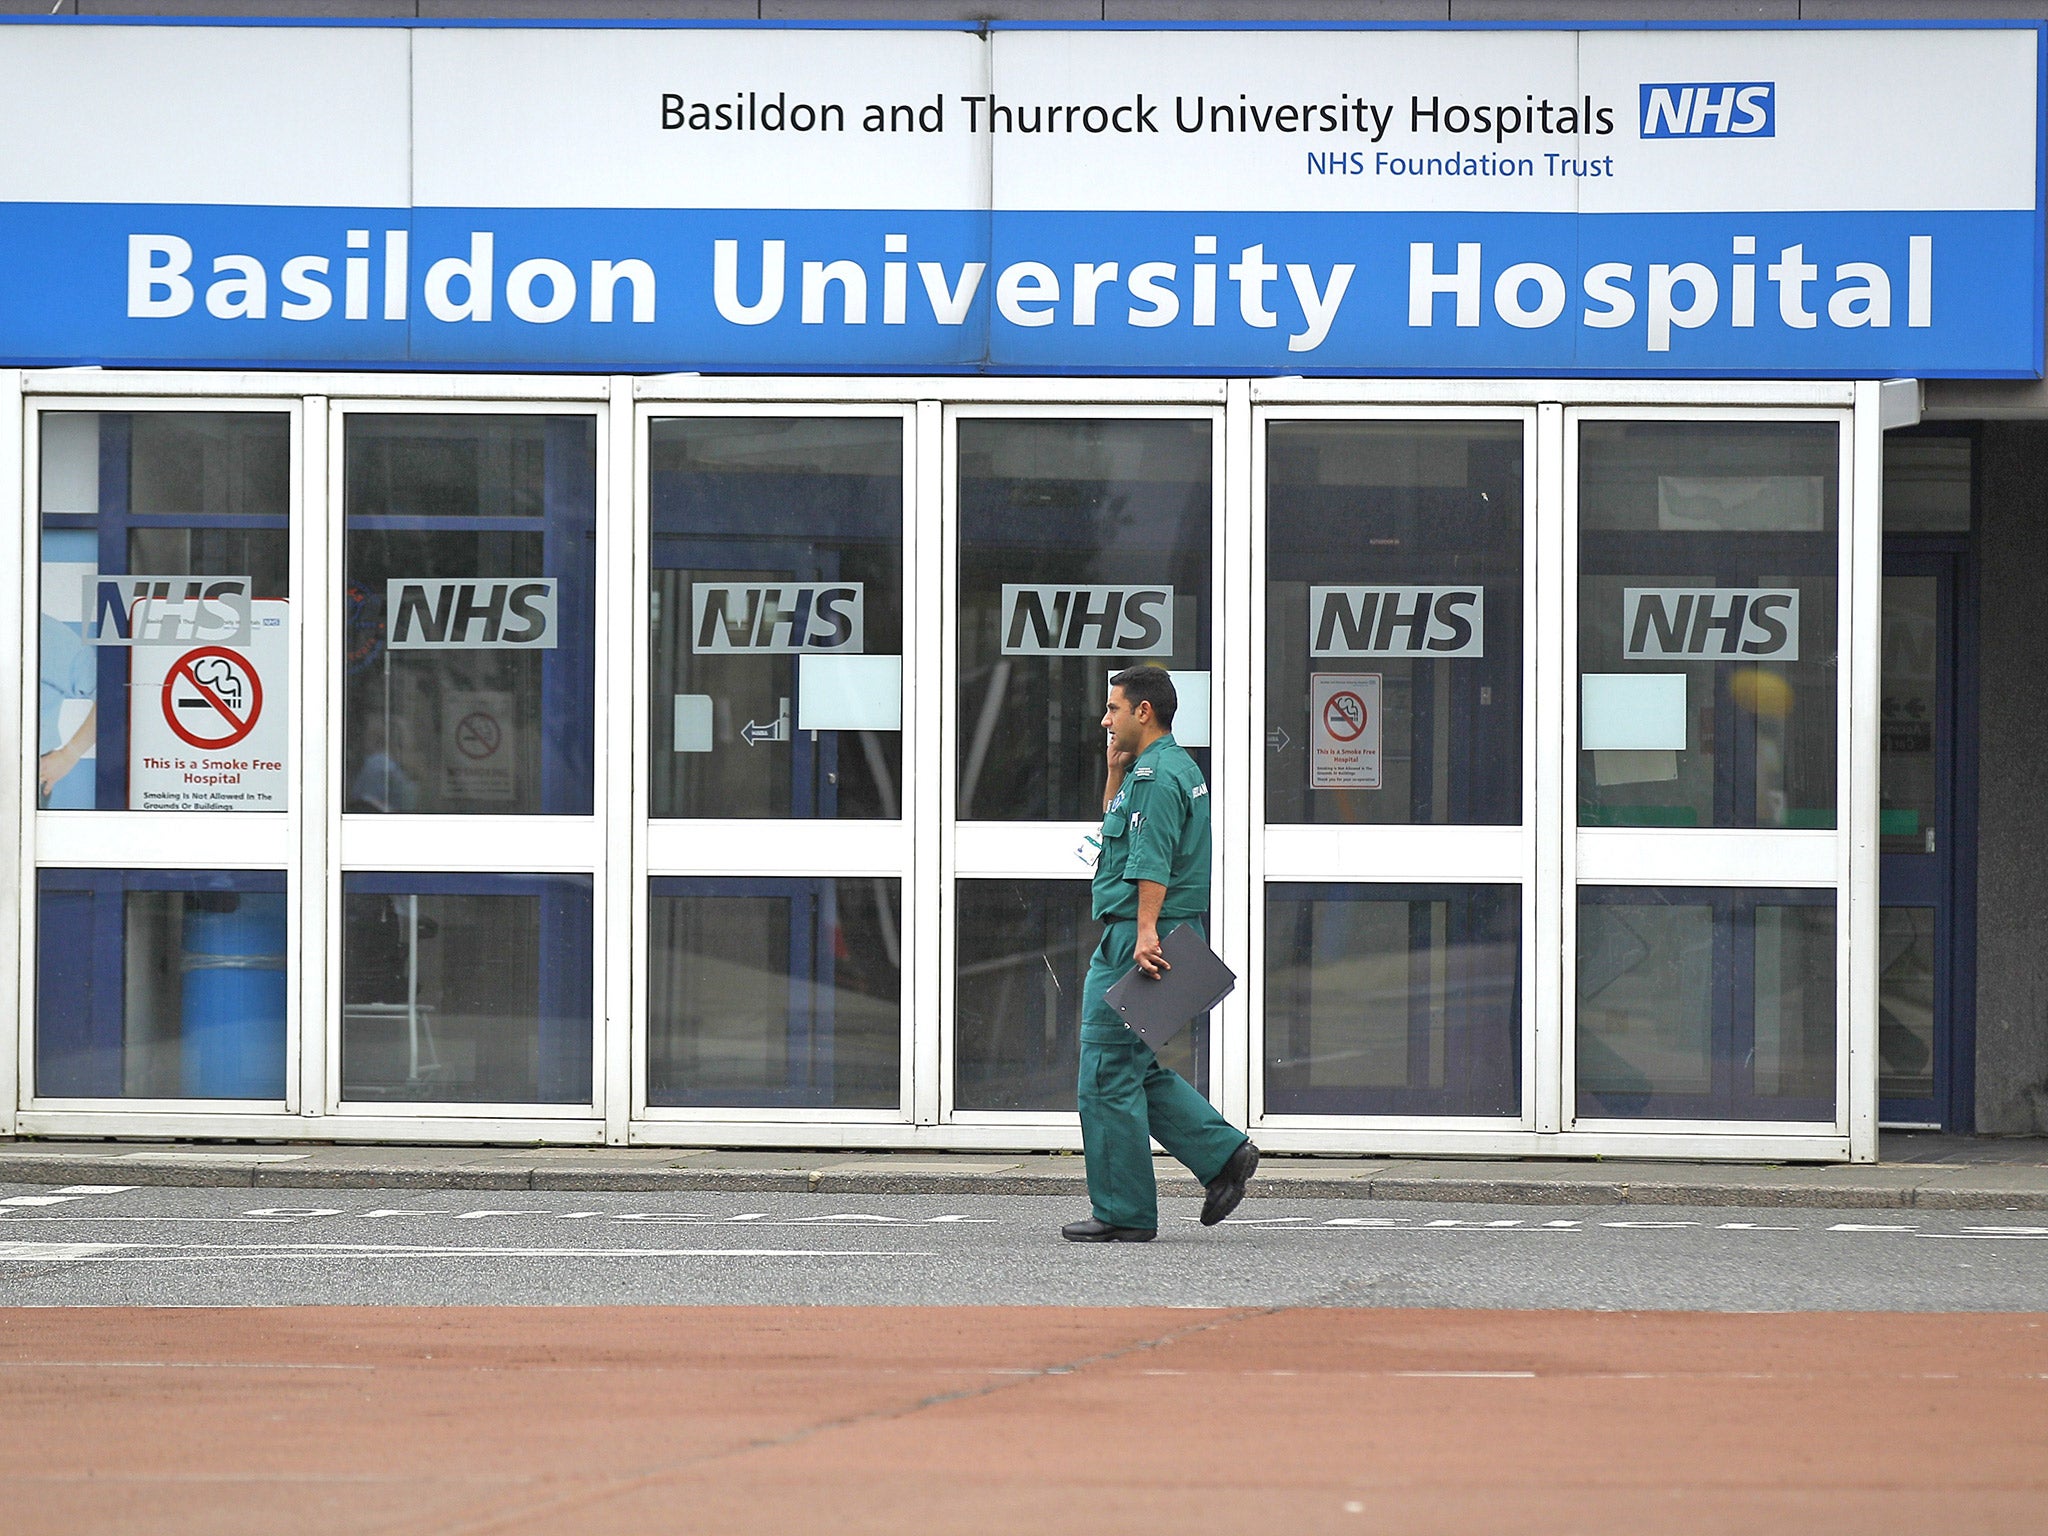 Basildon University Hospital in Essex